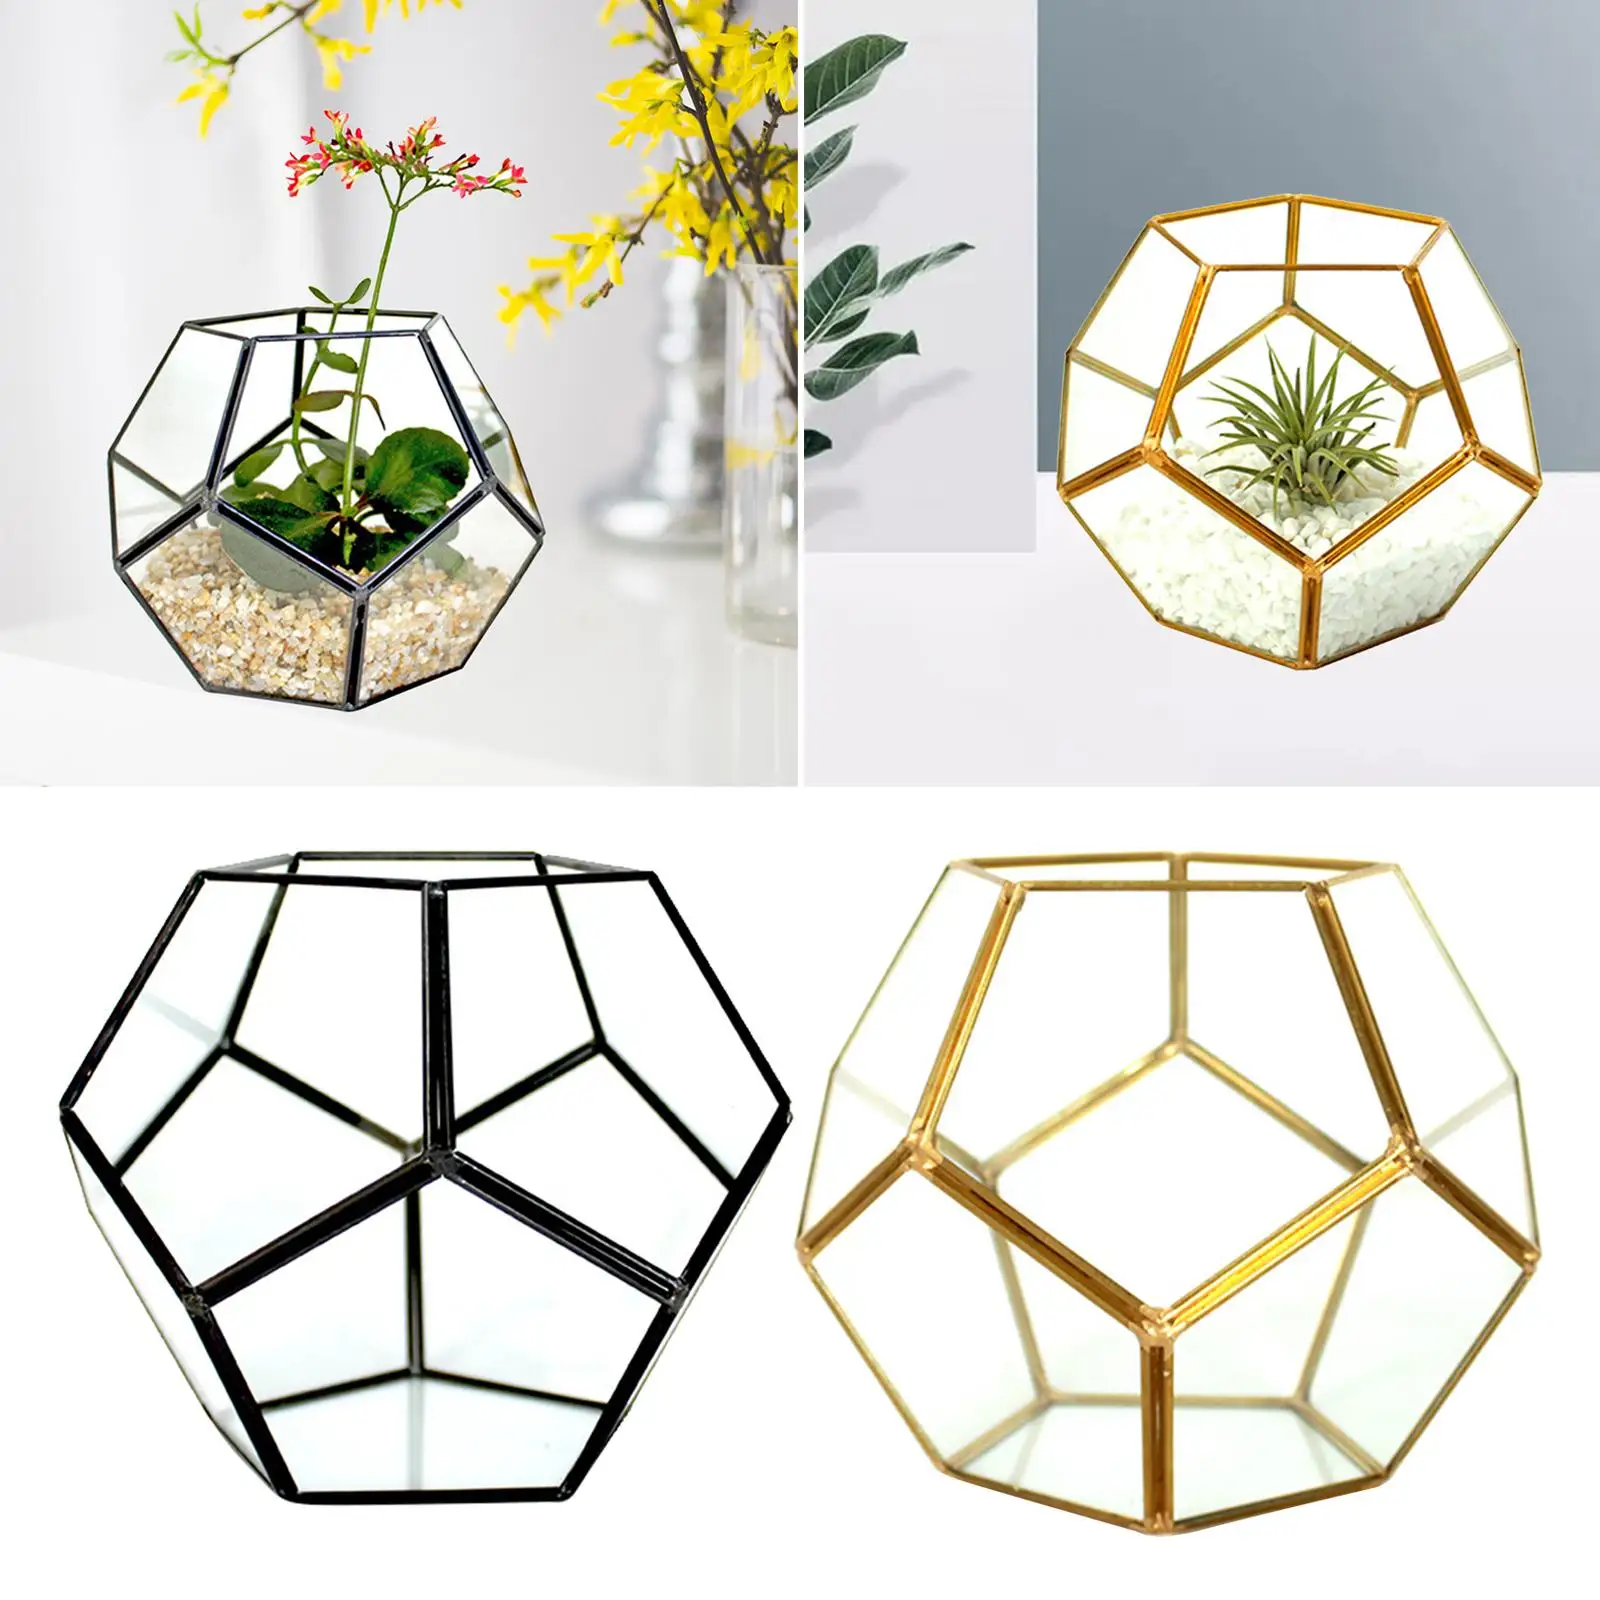 Geometric Terrarium, Planter Shelves, Bonsai Container for , Fern Air Plants Tabletop Decor Gift